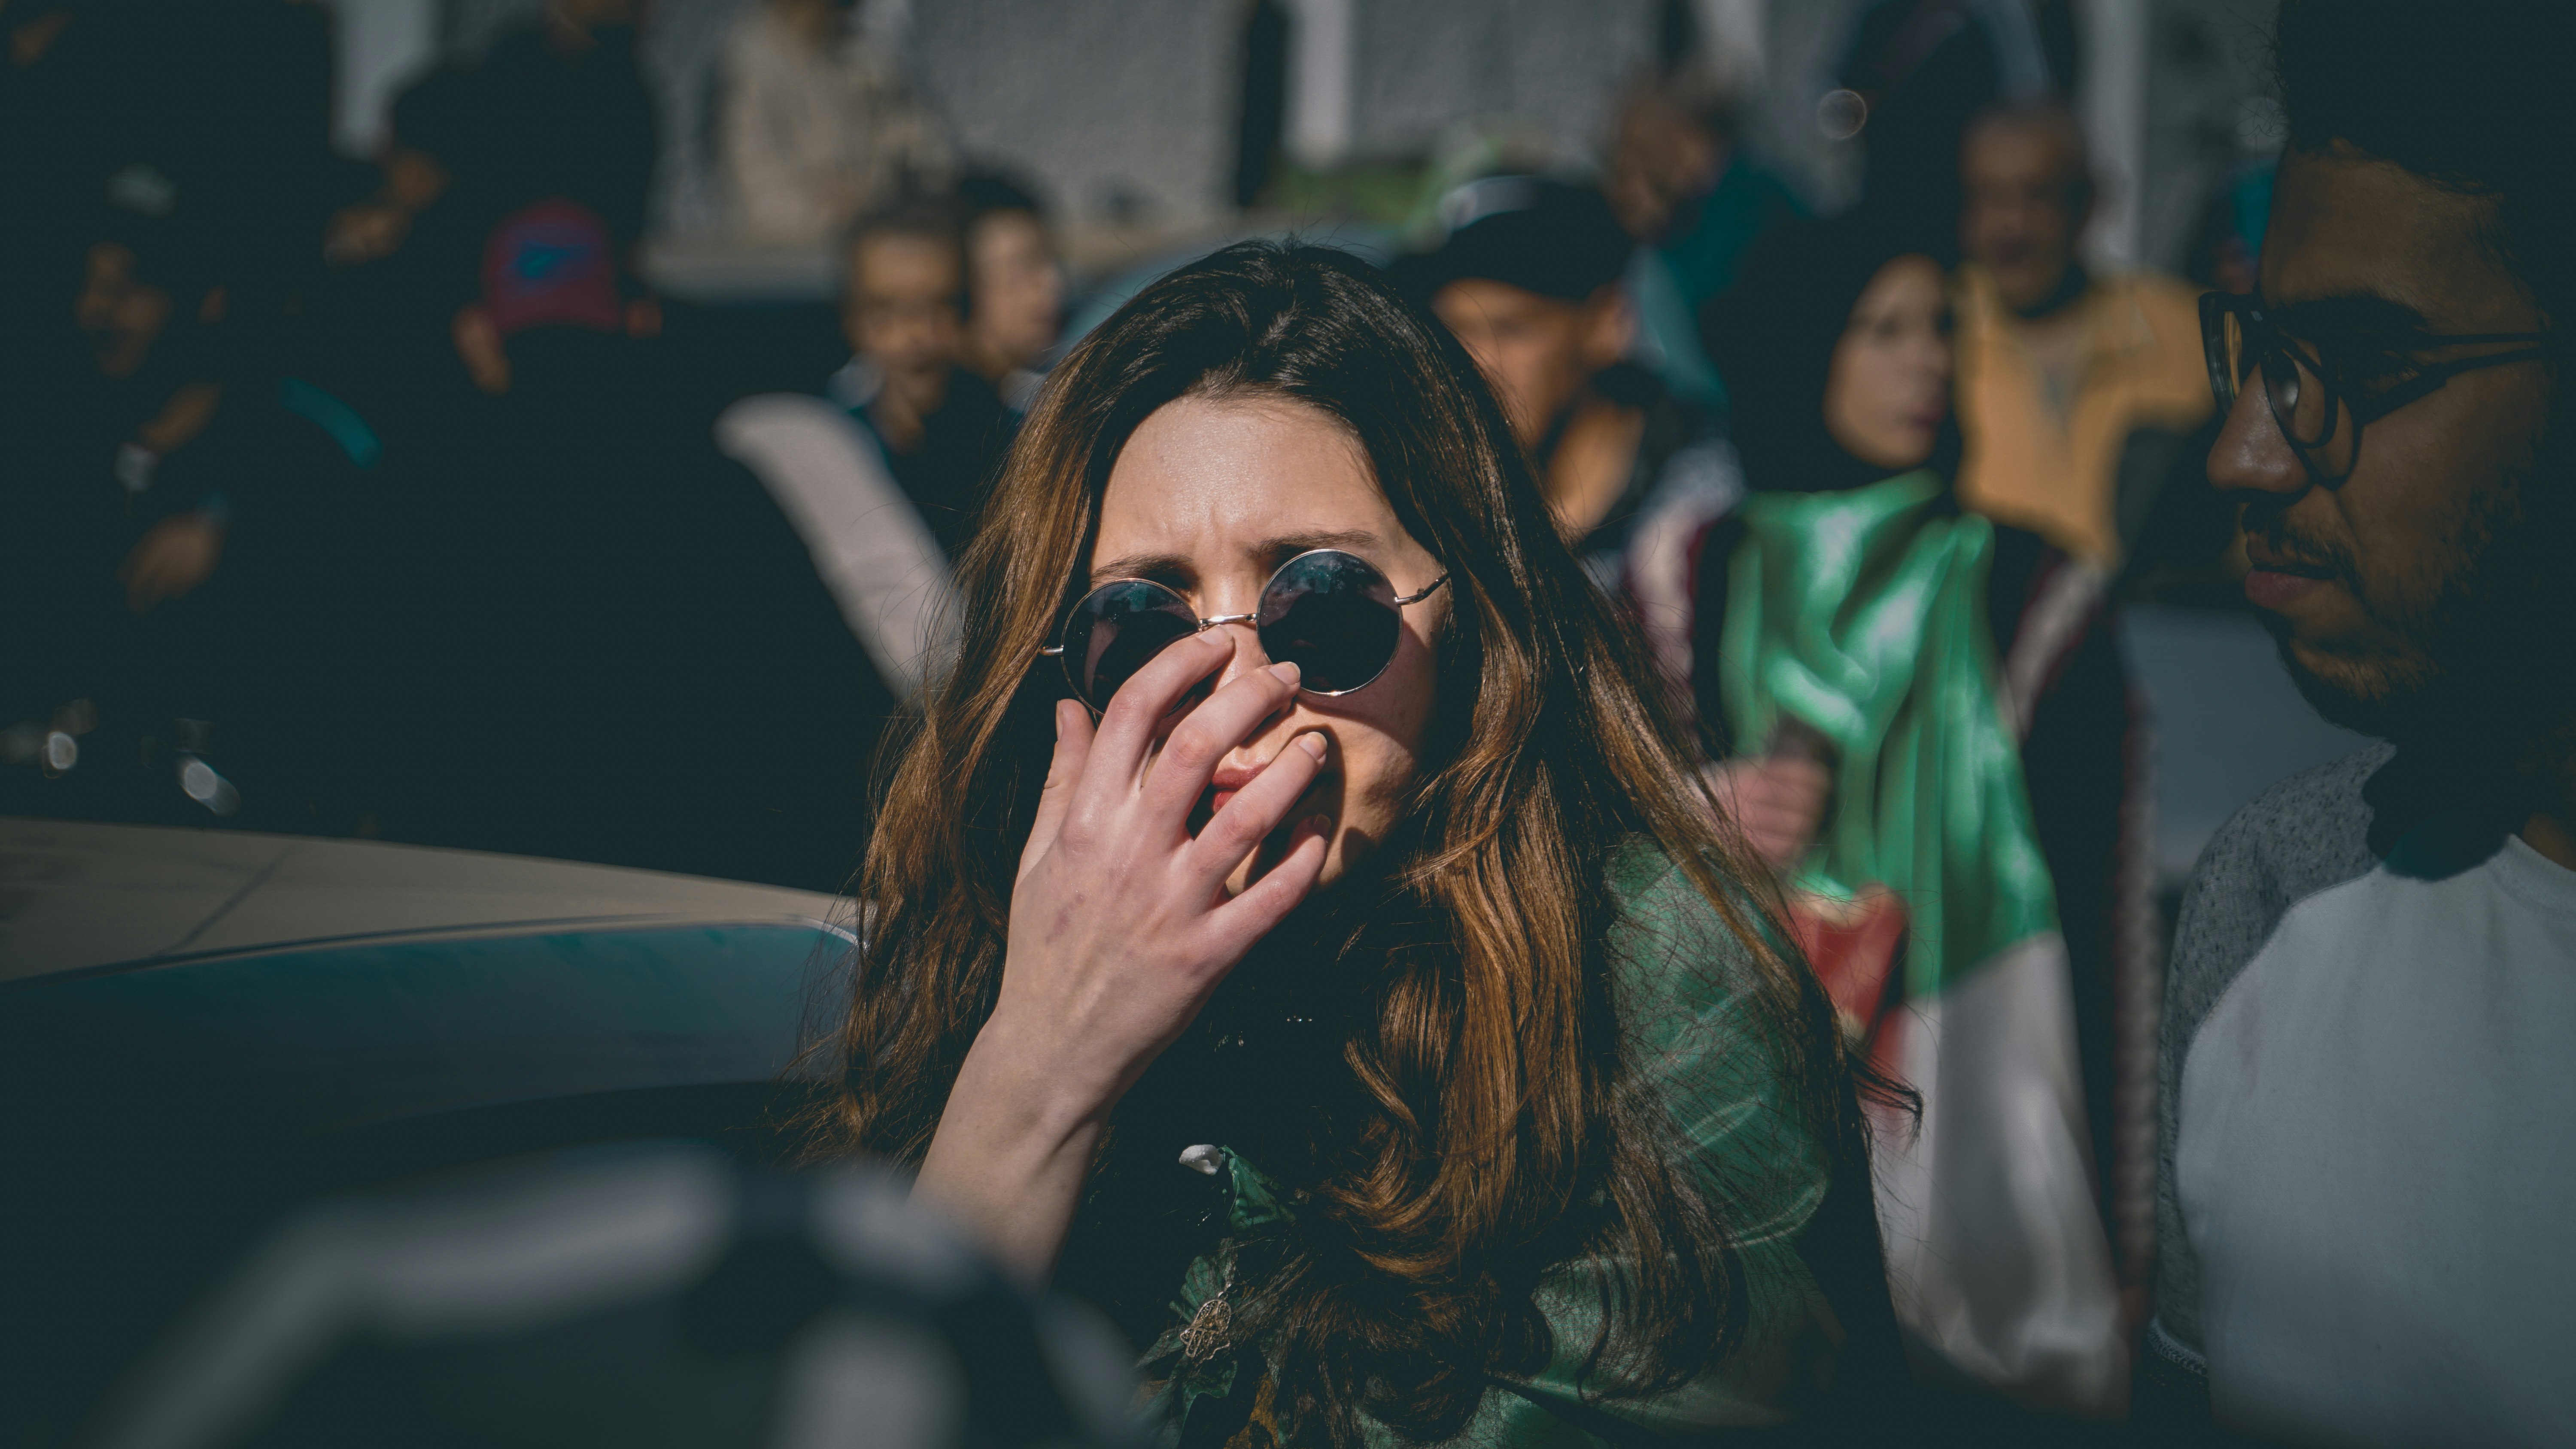 woman holding sunglasses